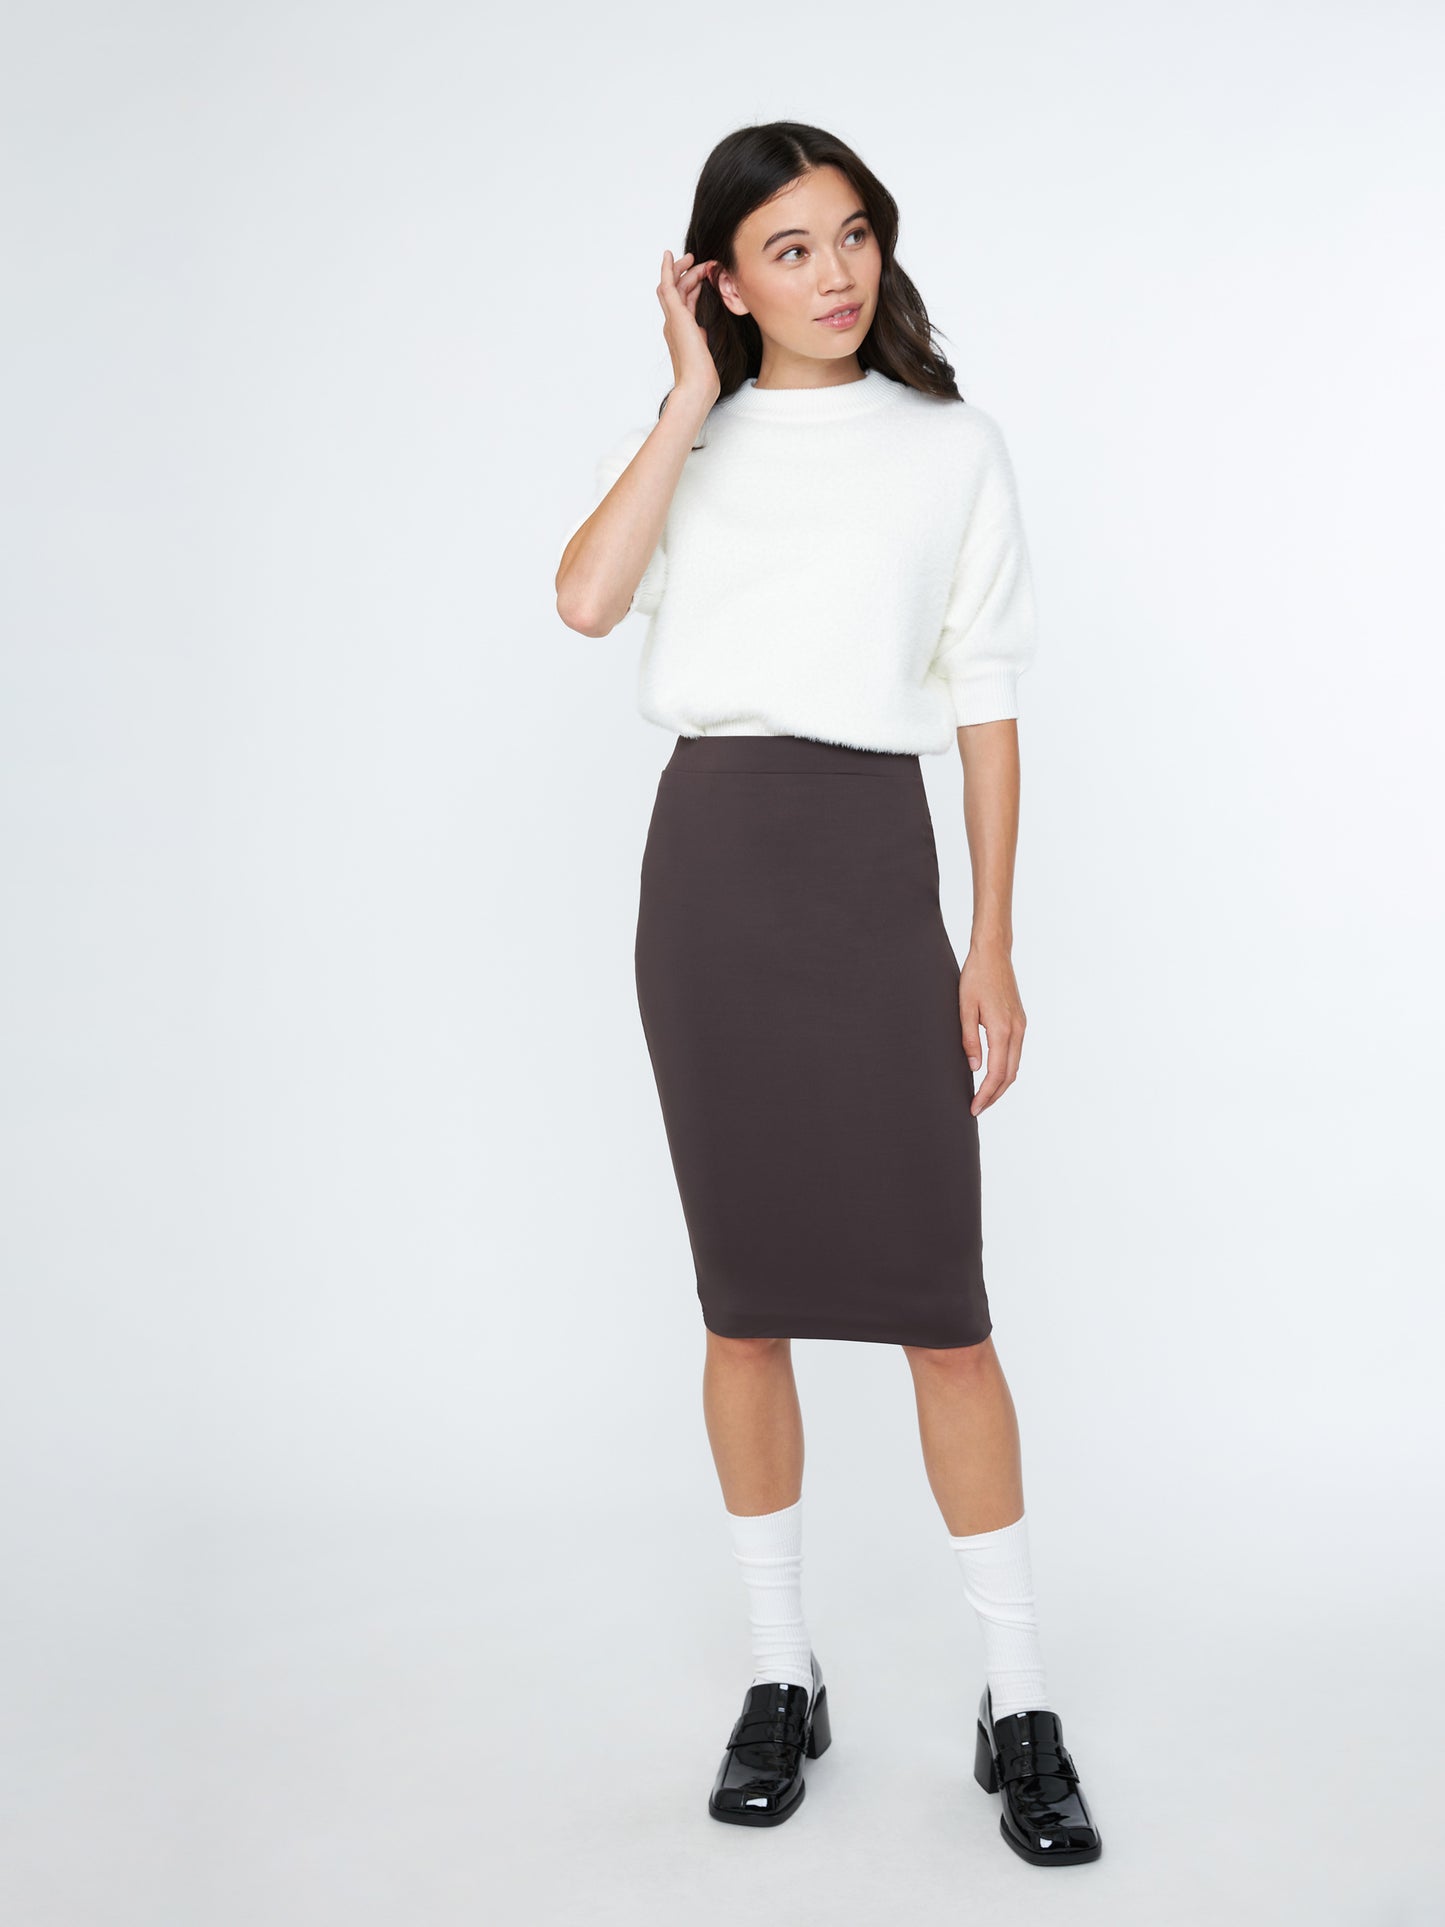 Tanira Mid Skirt